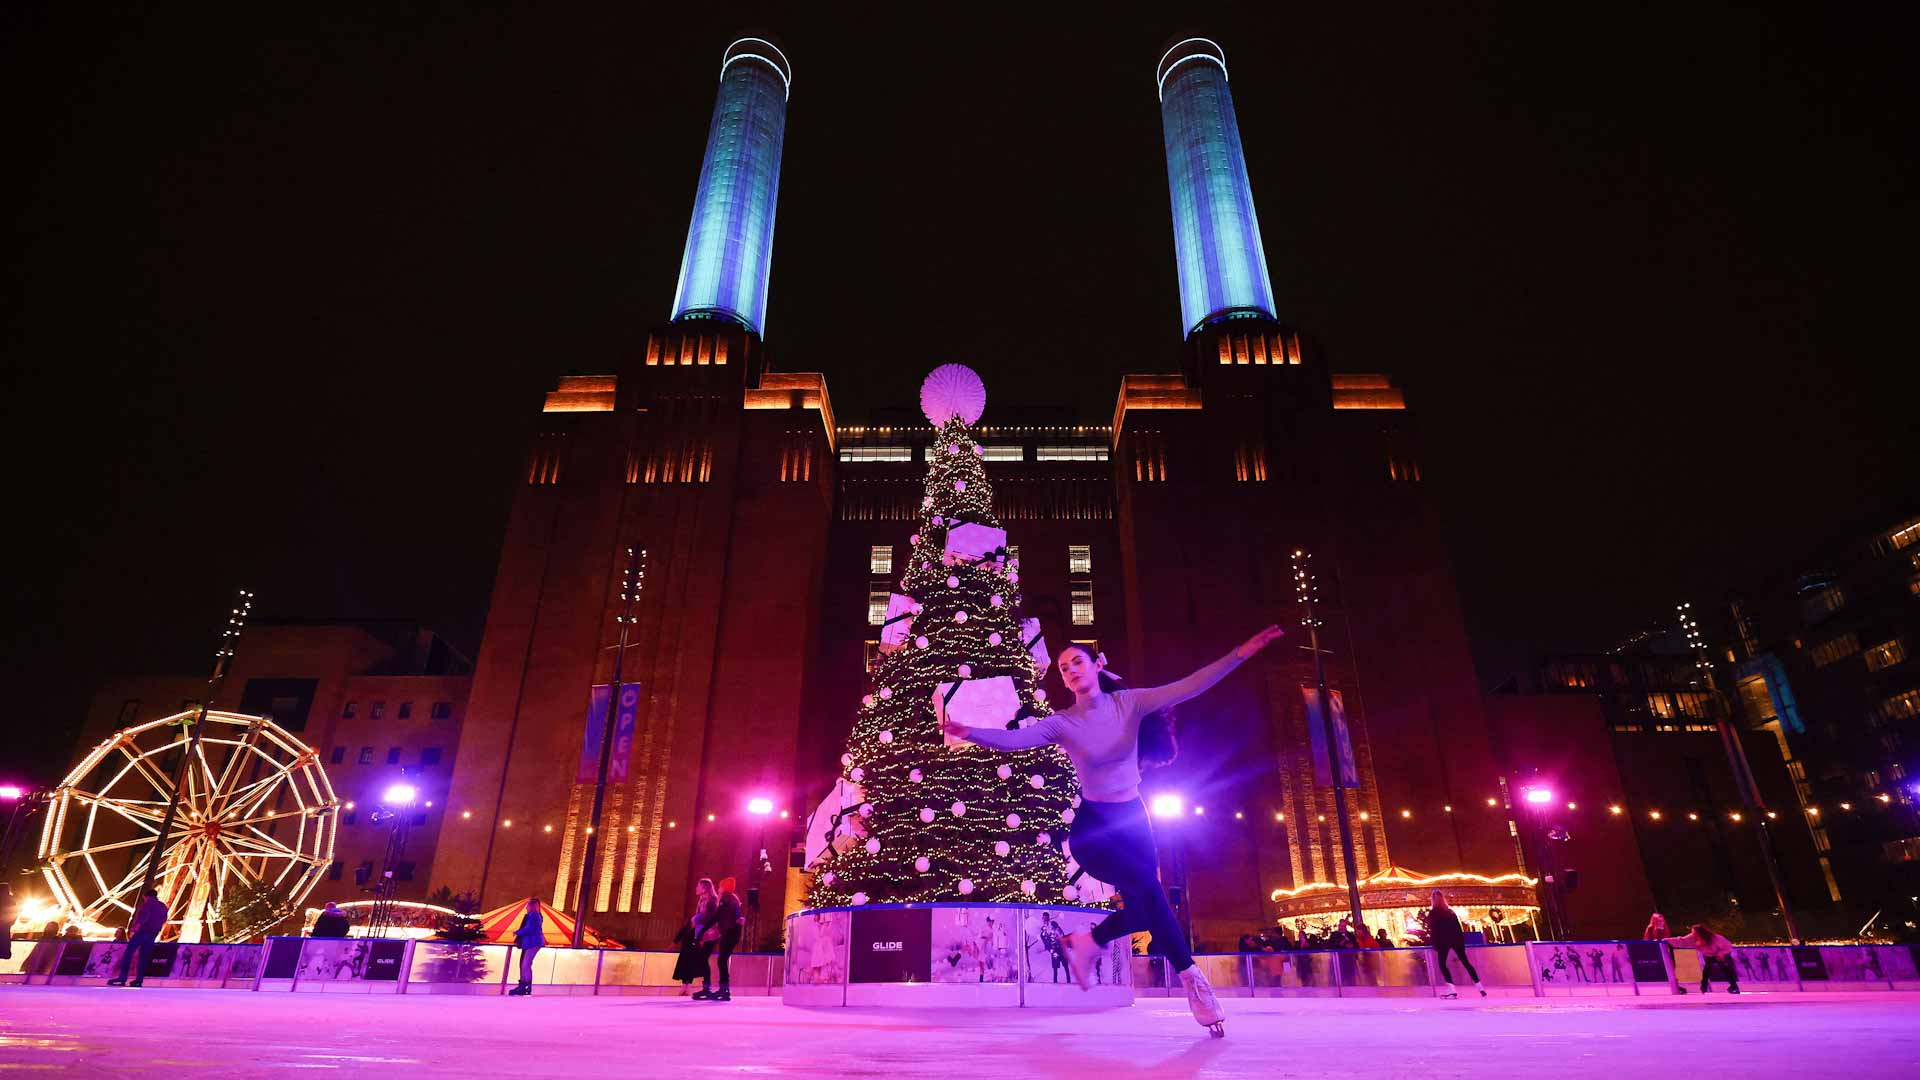 London's Battersea Power Station debuts ice rink